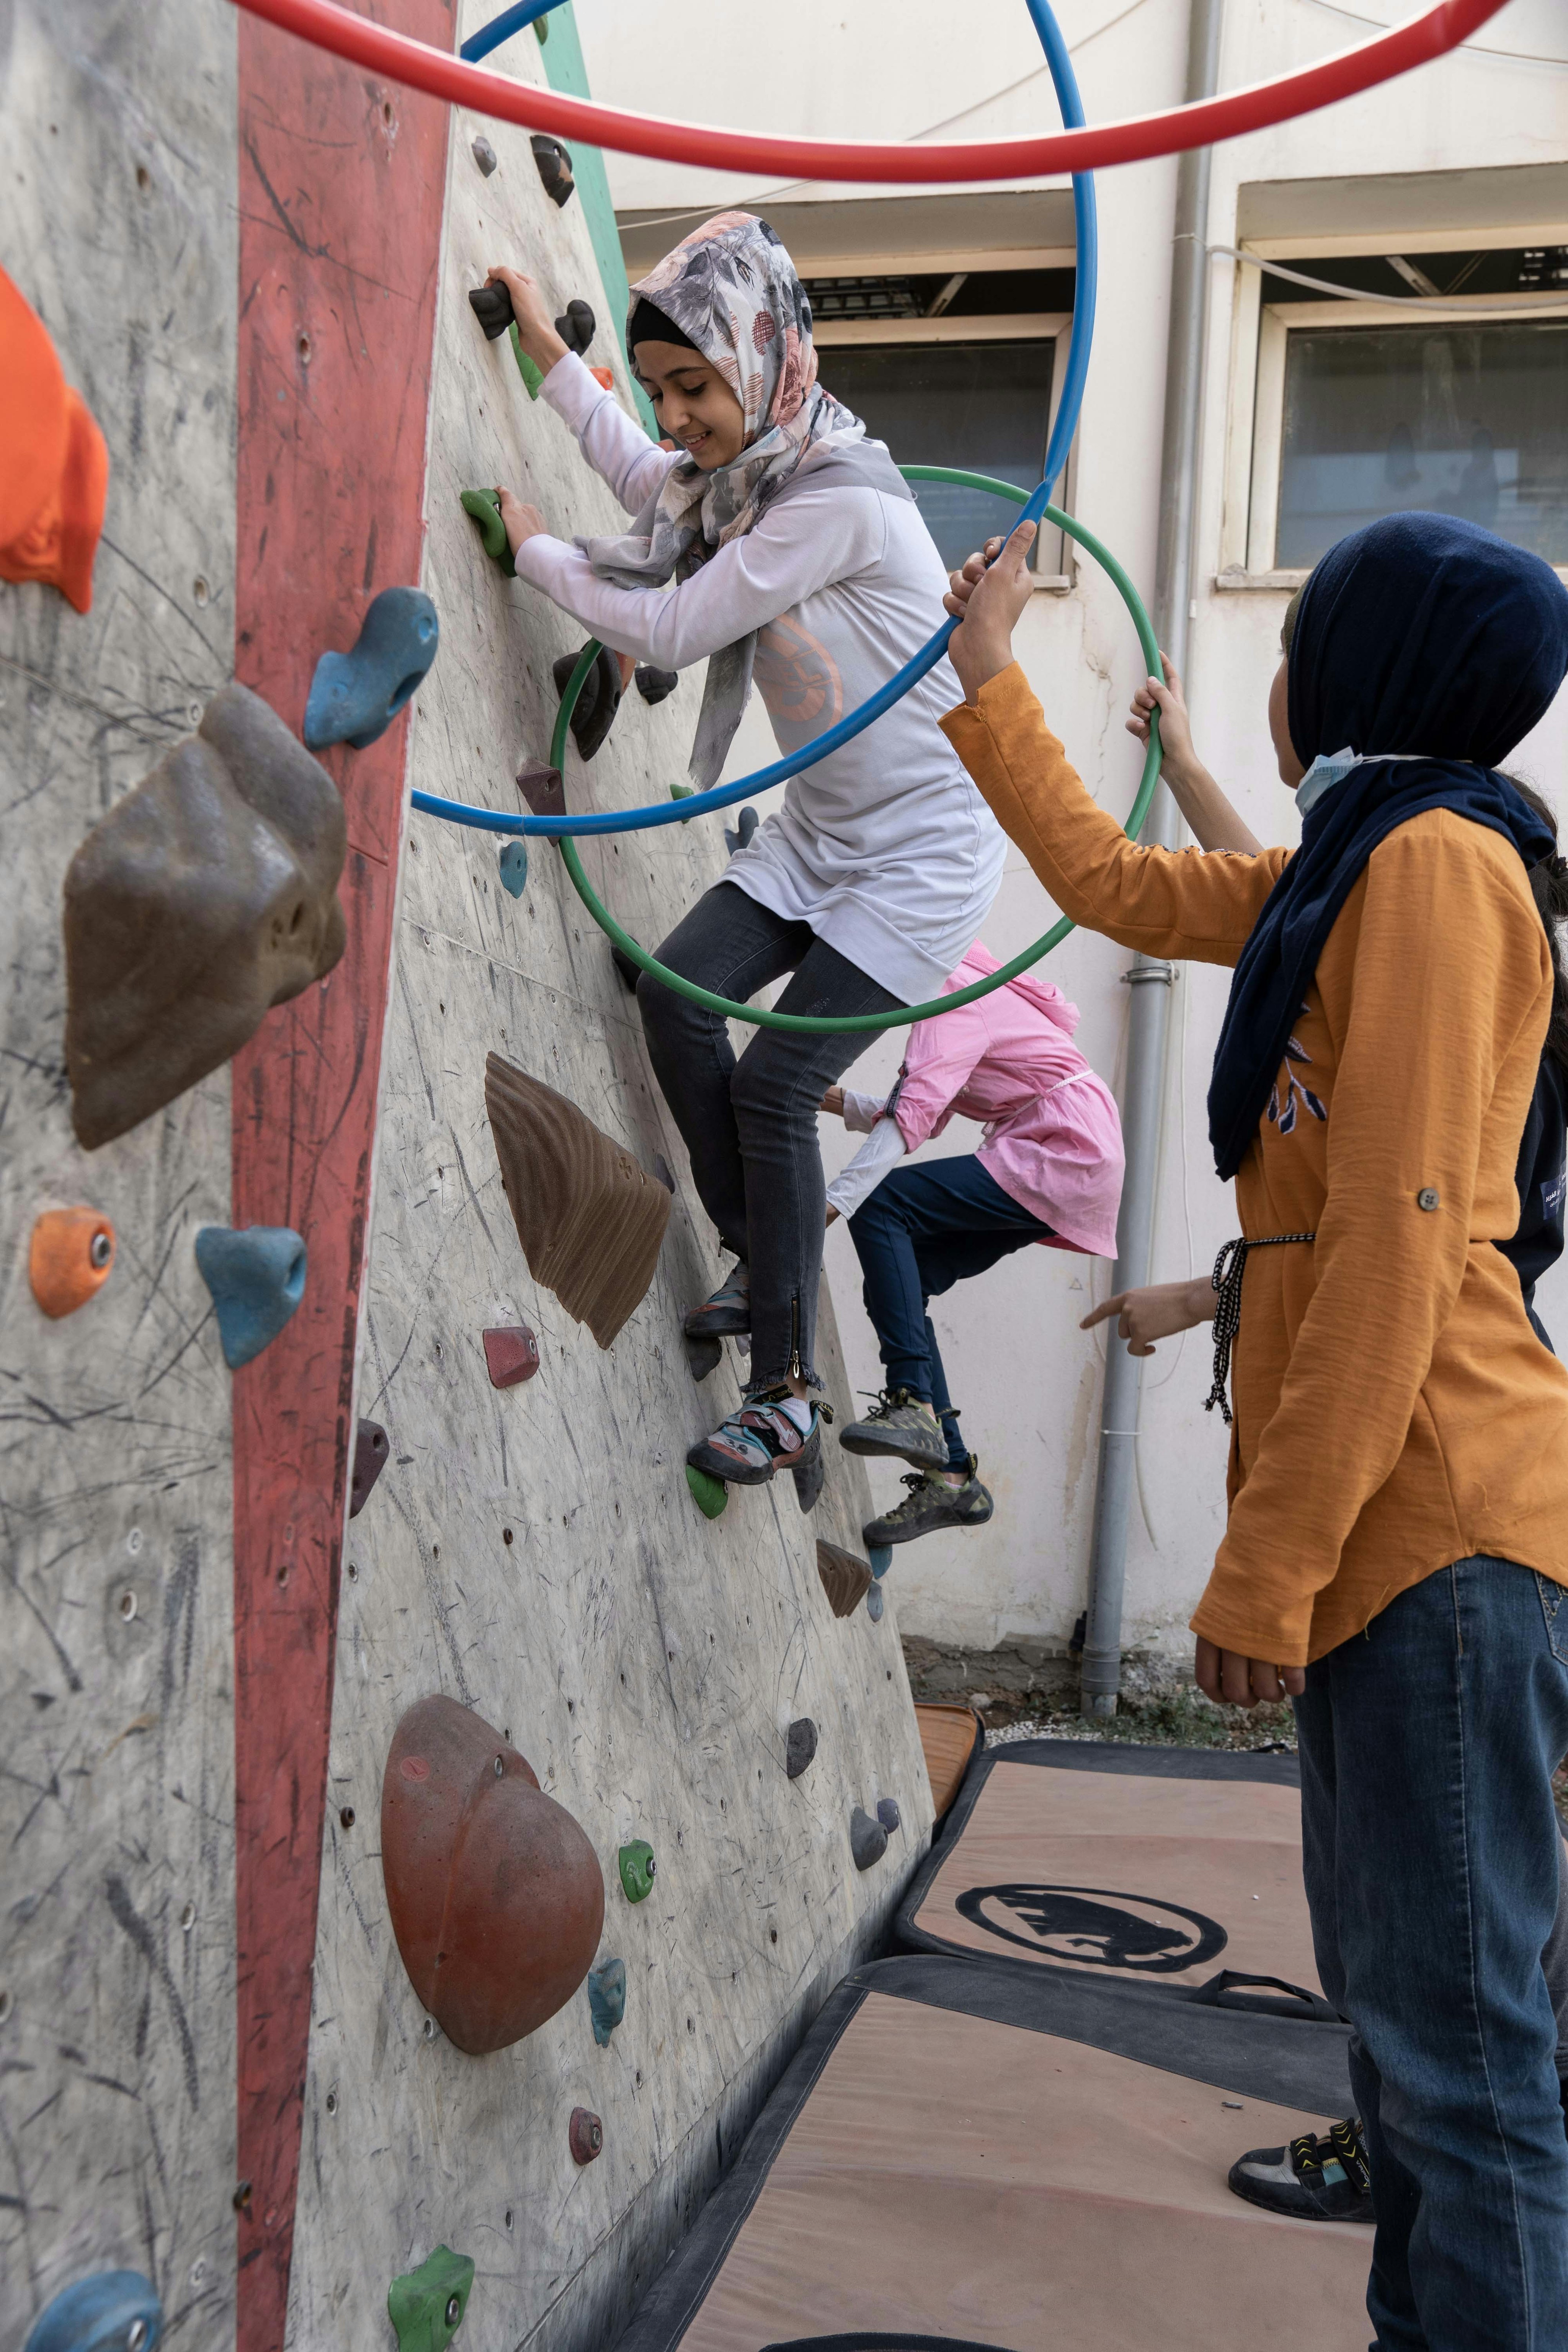 A girl bouldering on an artificial climbing wall.